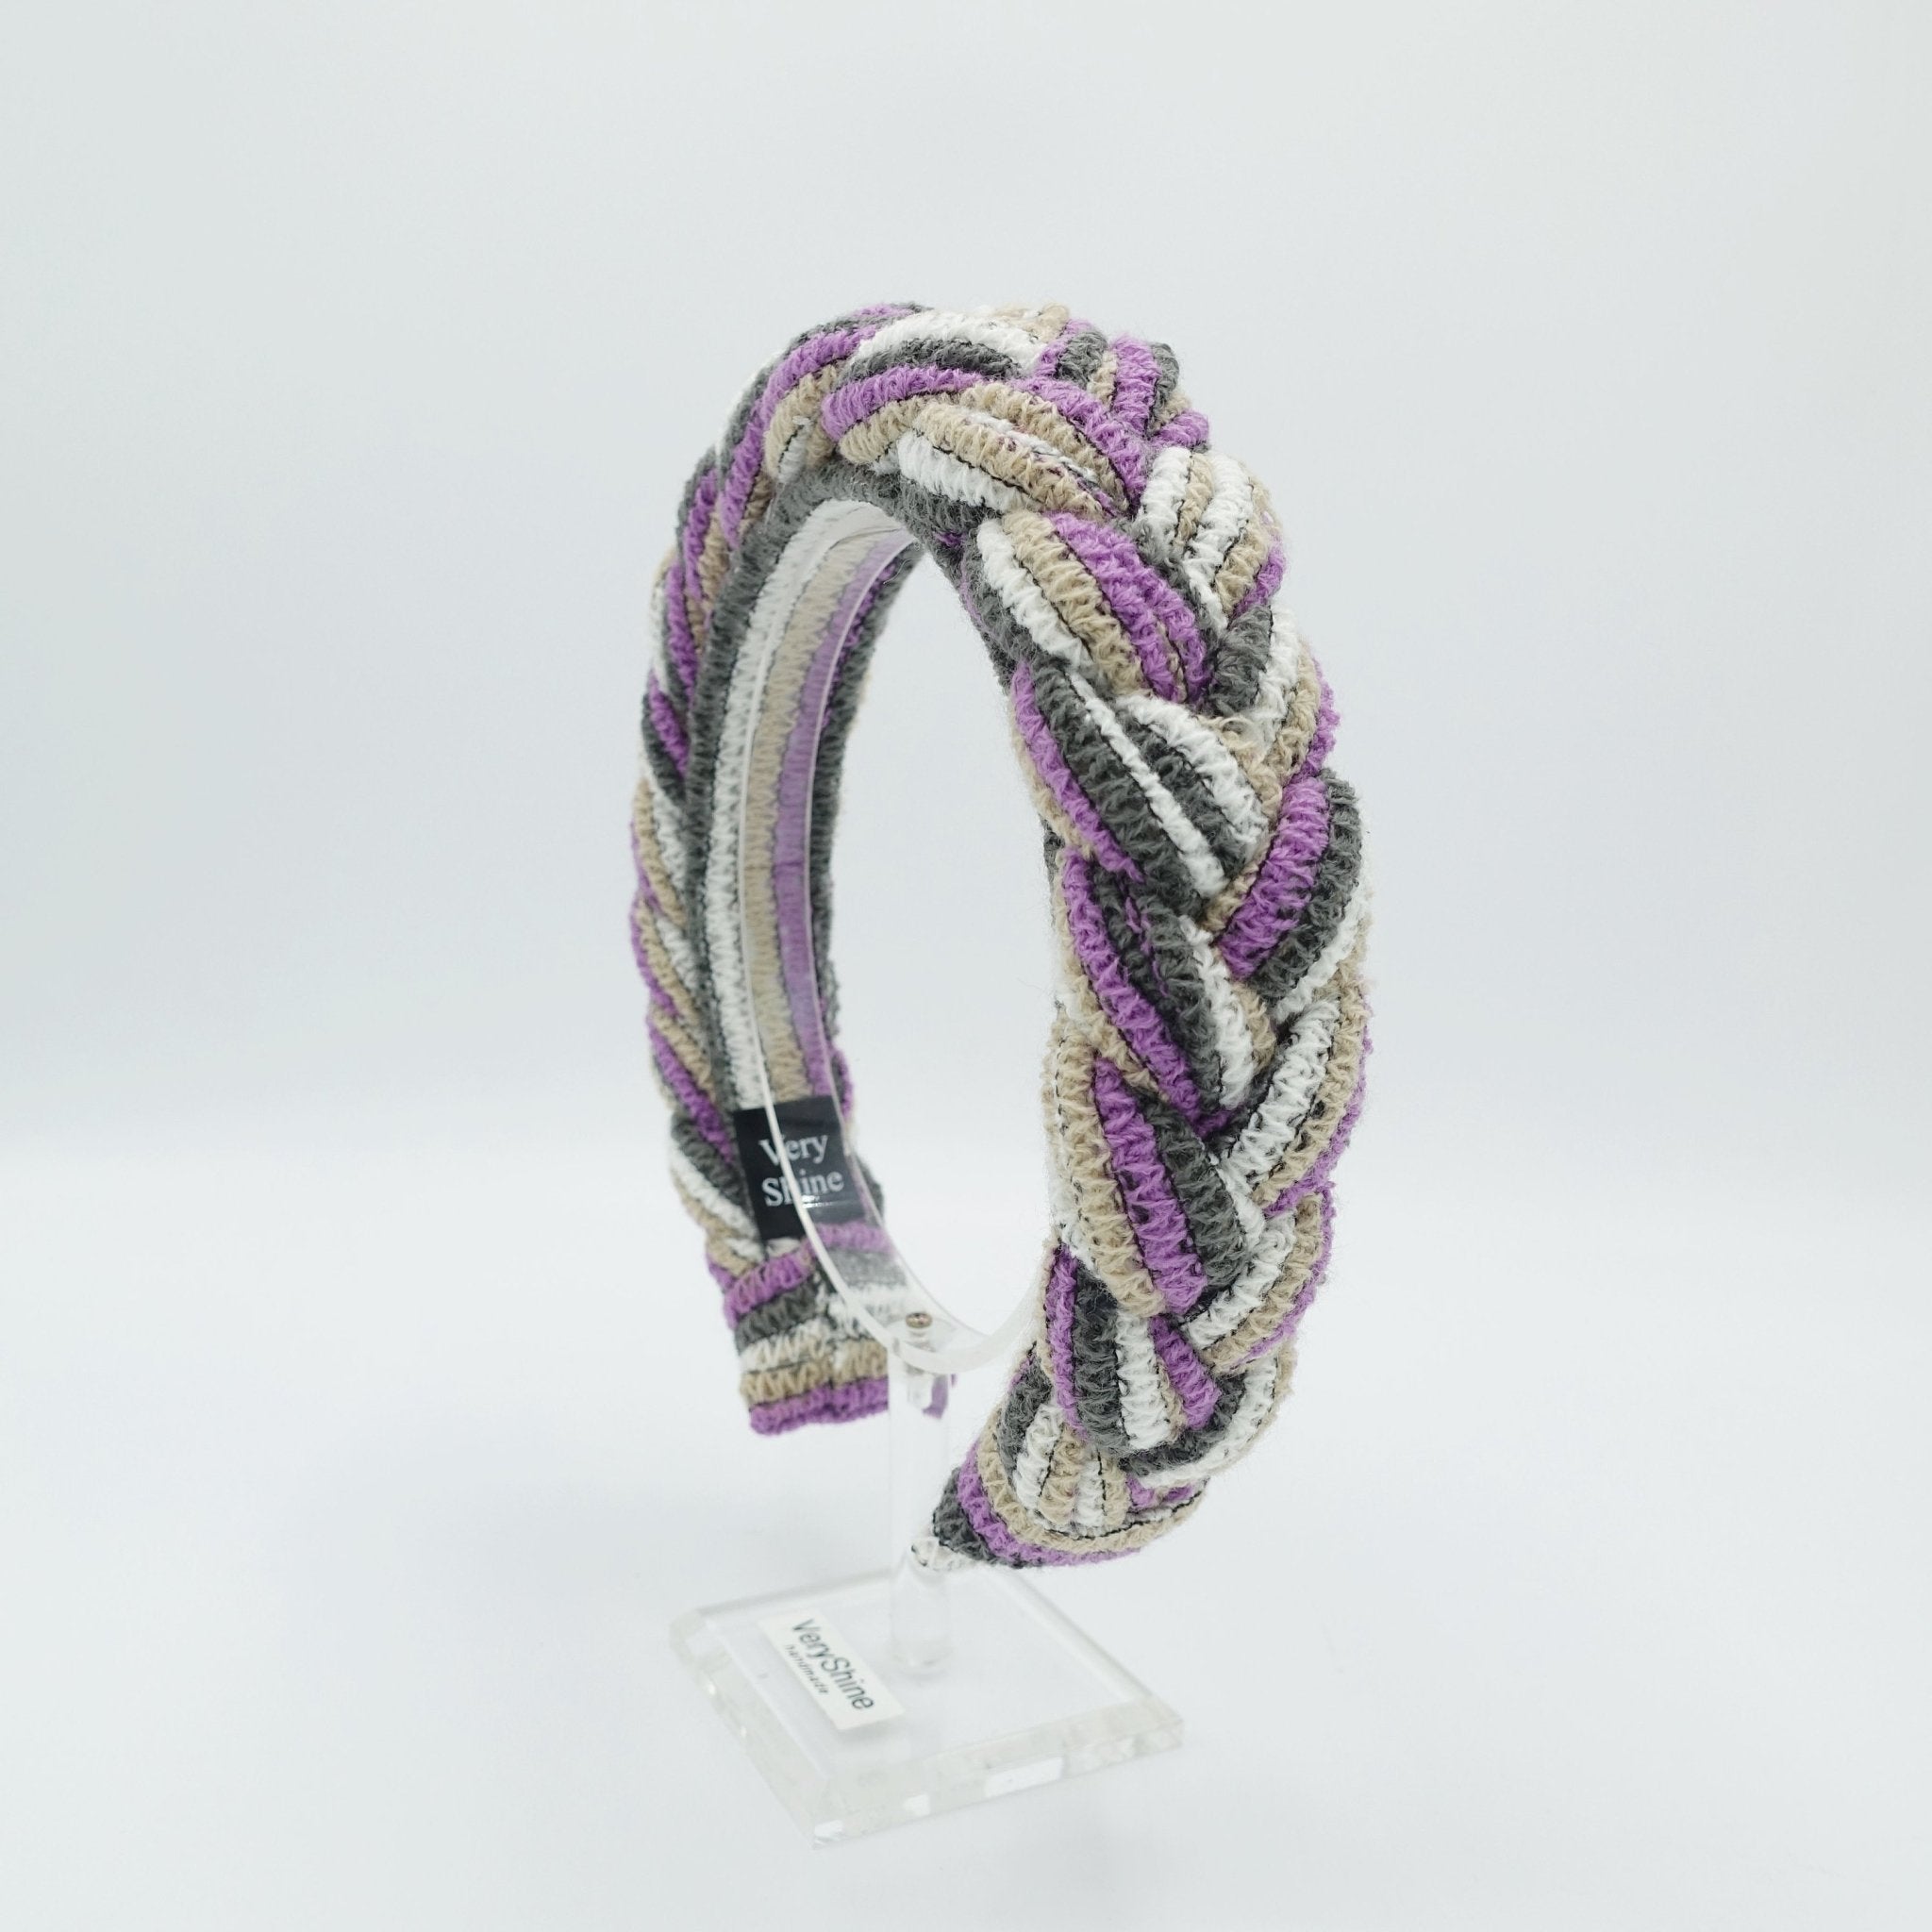 VeryShine Headbands & Turbans Purple stripe knit braided headband luxury women hairband plaited women hair accessory